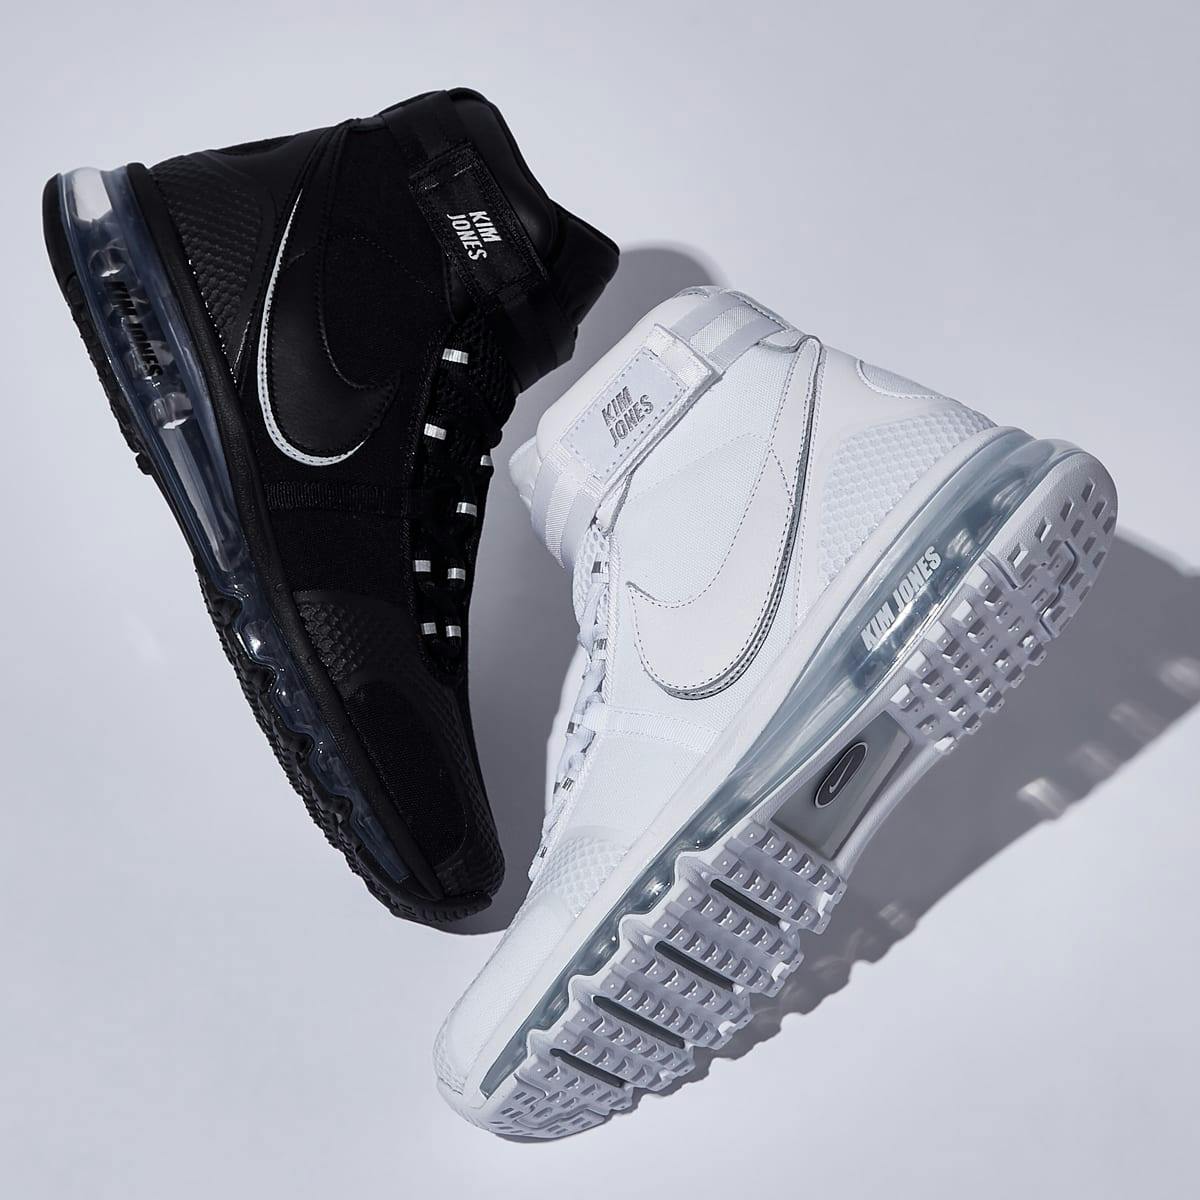 Nike Air Max 360 High x Kim Jones Triple Blk Shoes AO2313-001